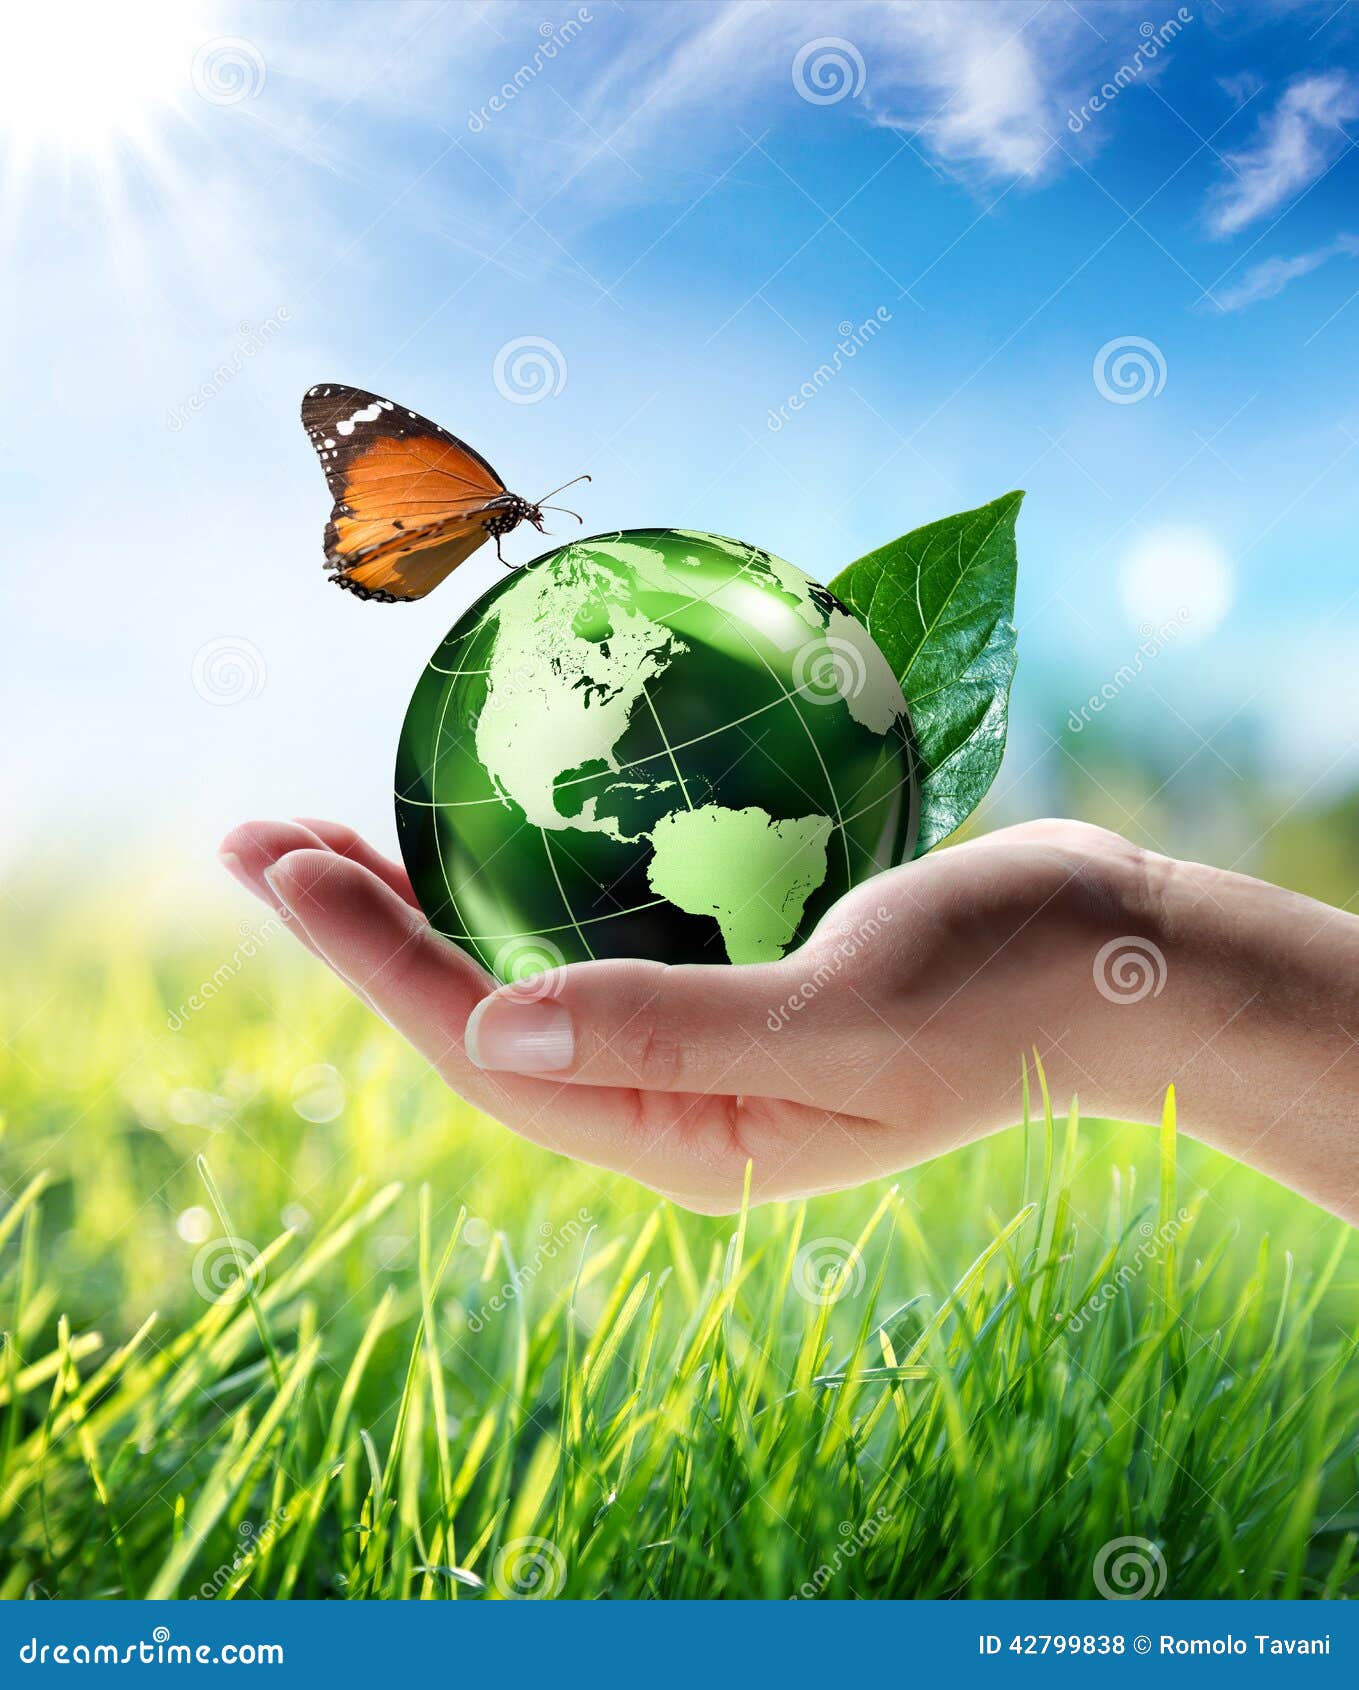 eco-friendly concept